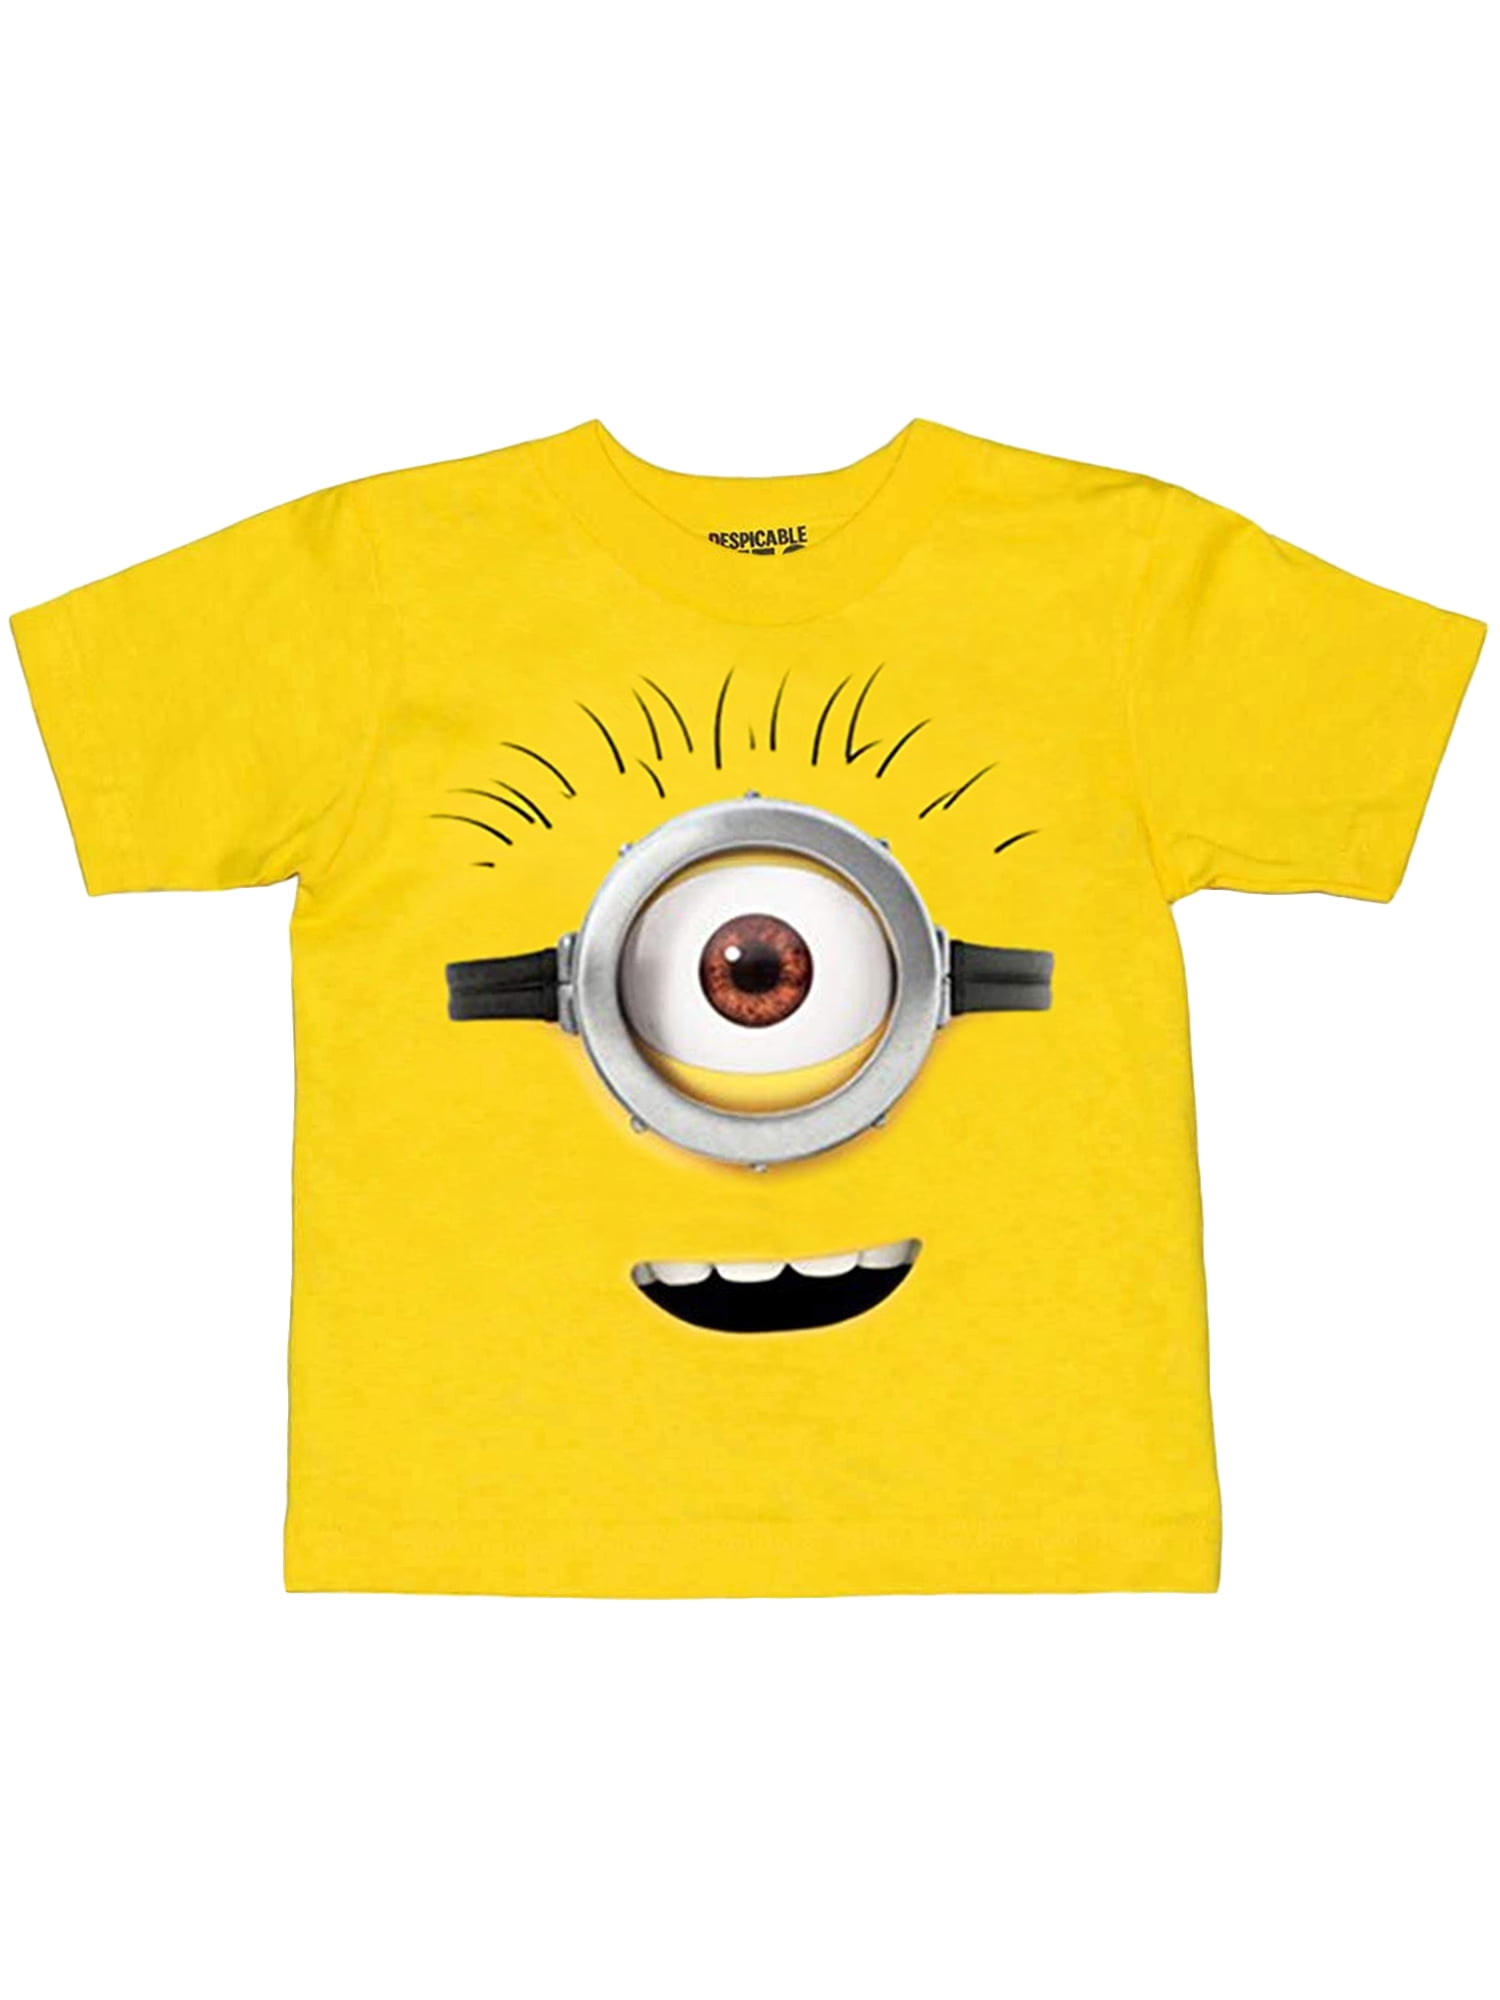 minion t shirt 2-13 years unisex multi listing yellow top fotl fun 